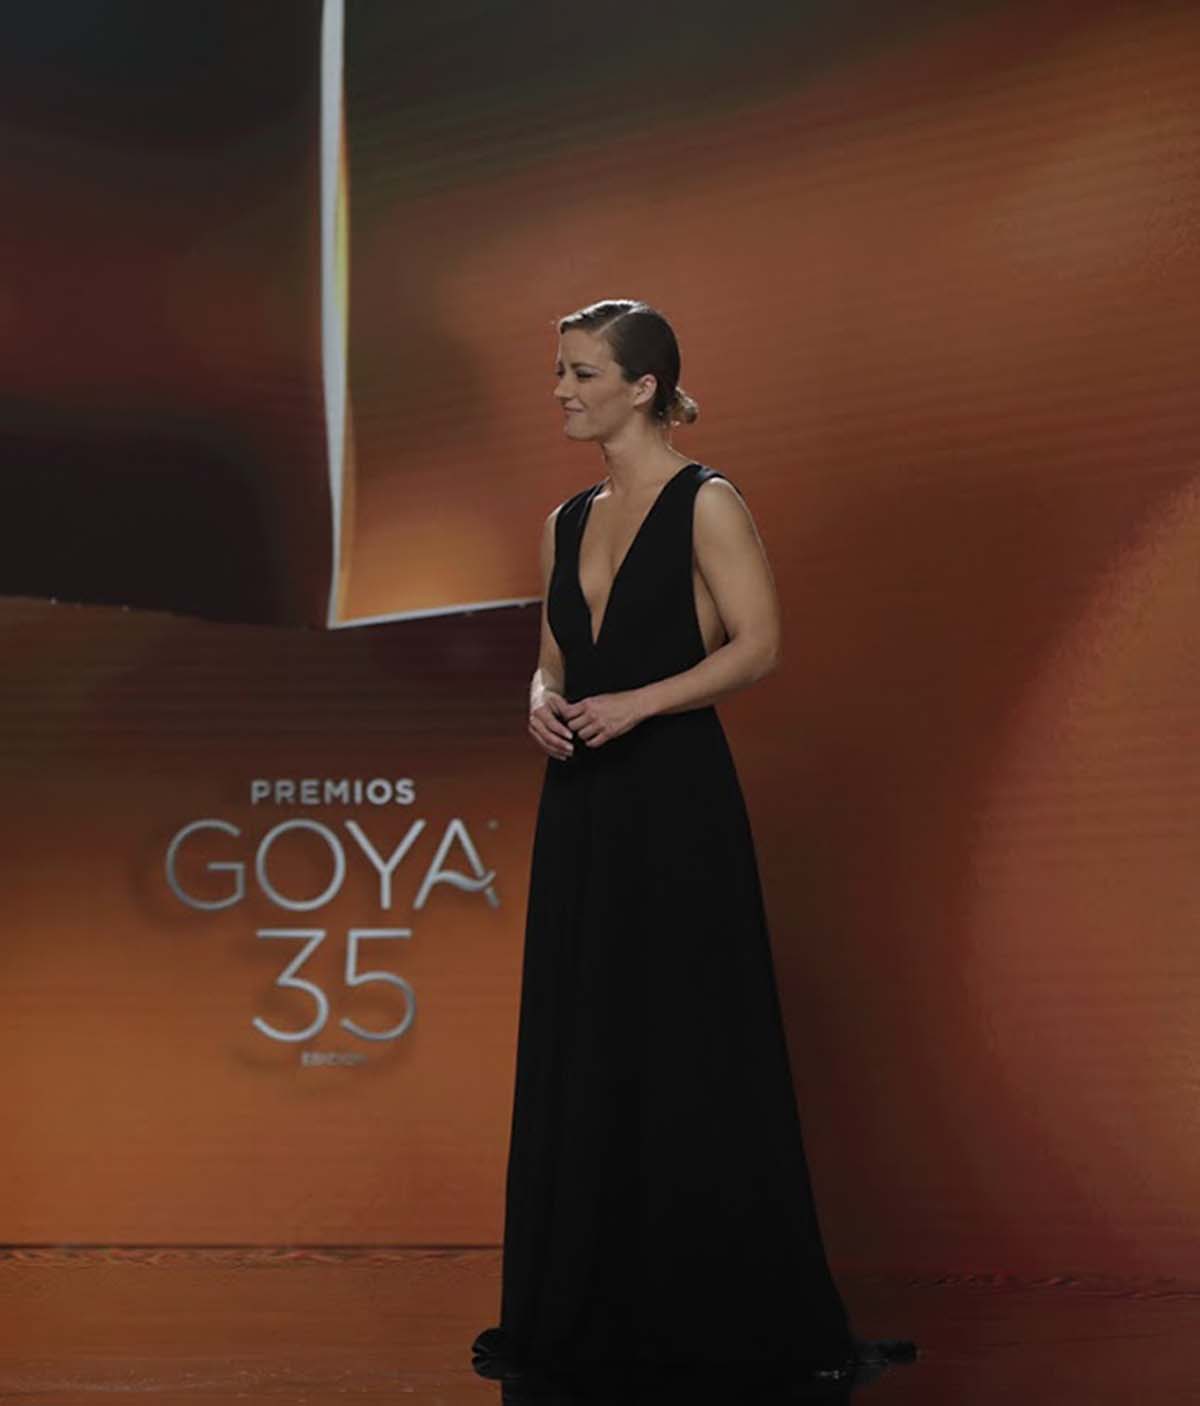 Antonio Banderas and Maria Casado during the 35th annual Goya Film Awards in Malaga on Saturday, 06 March 2021.